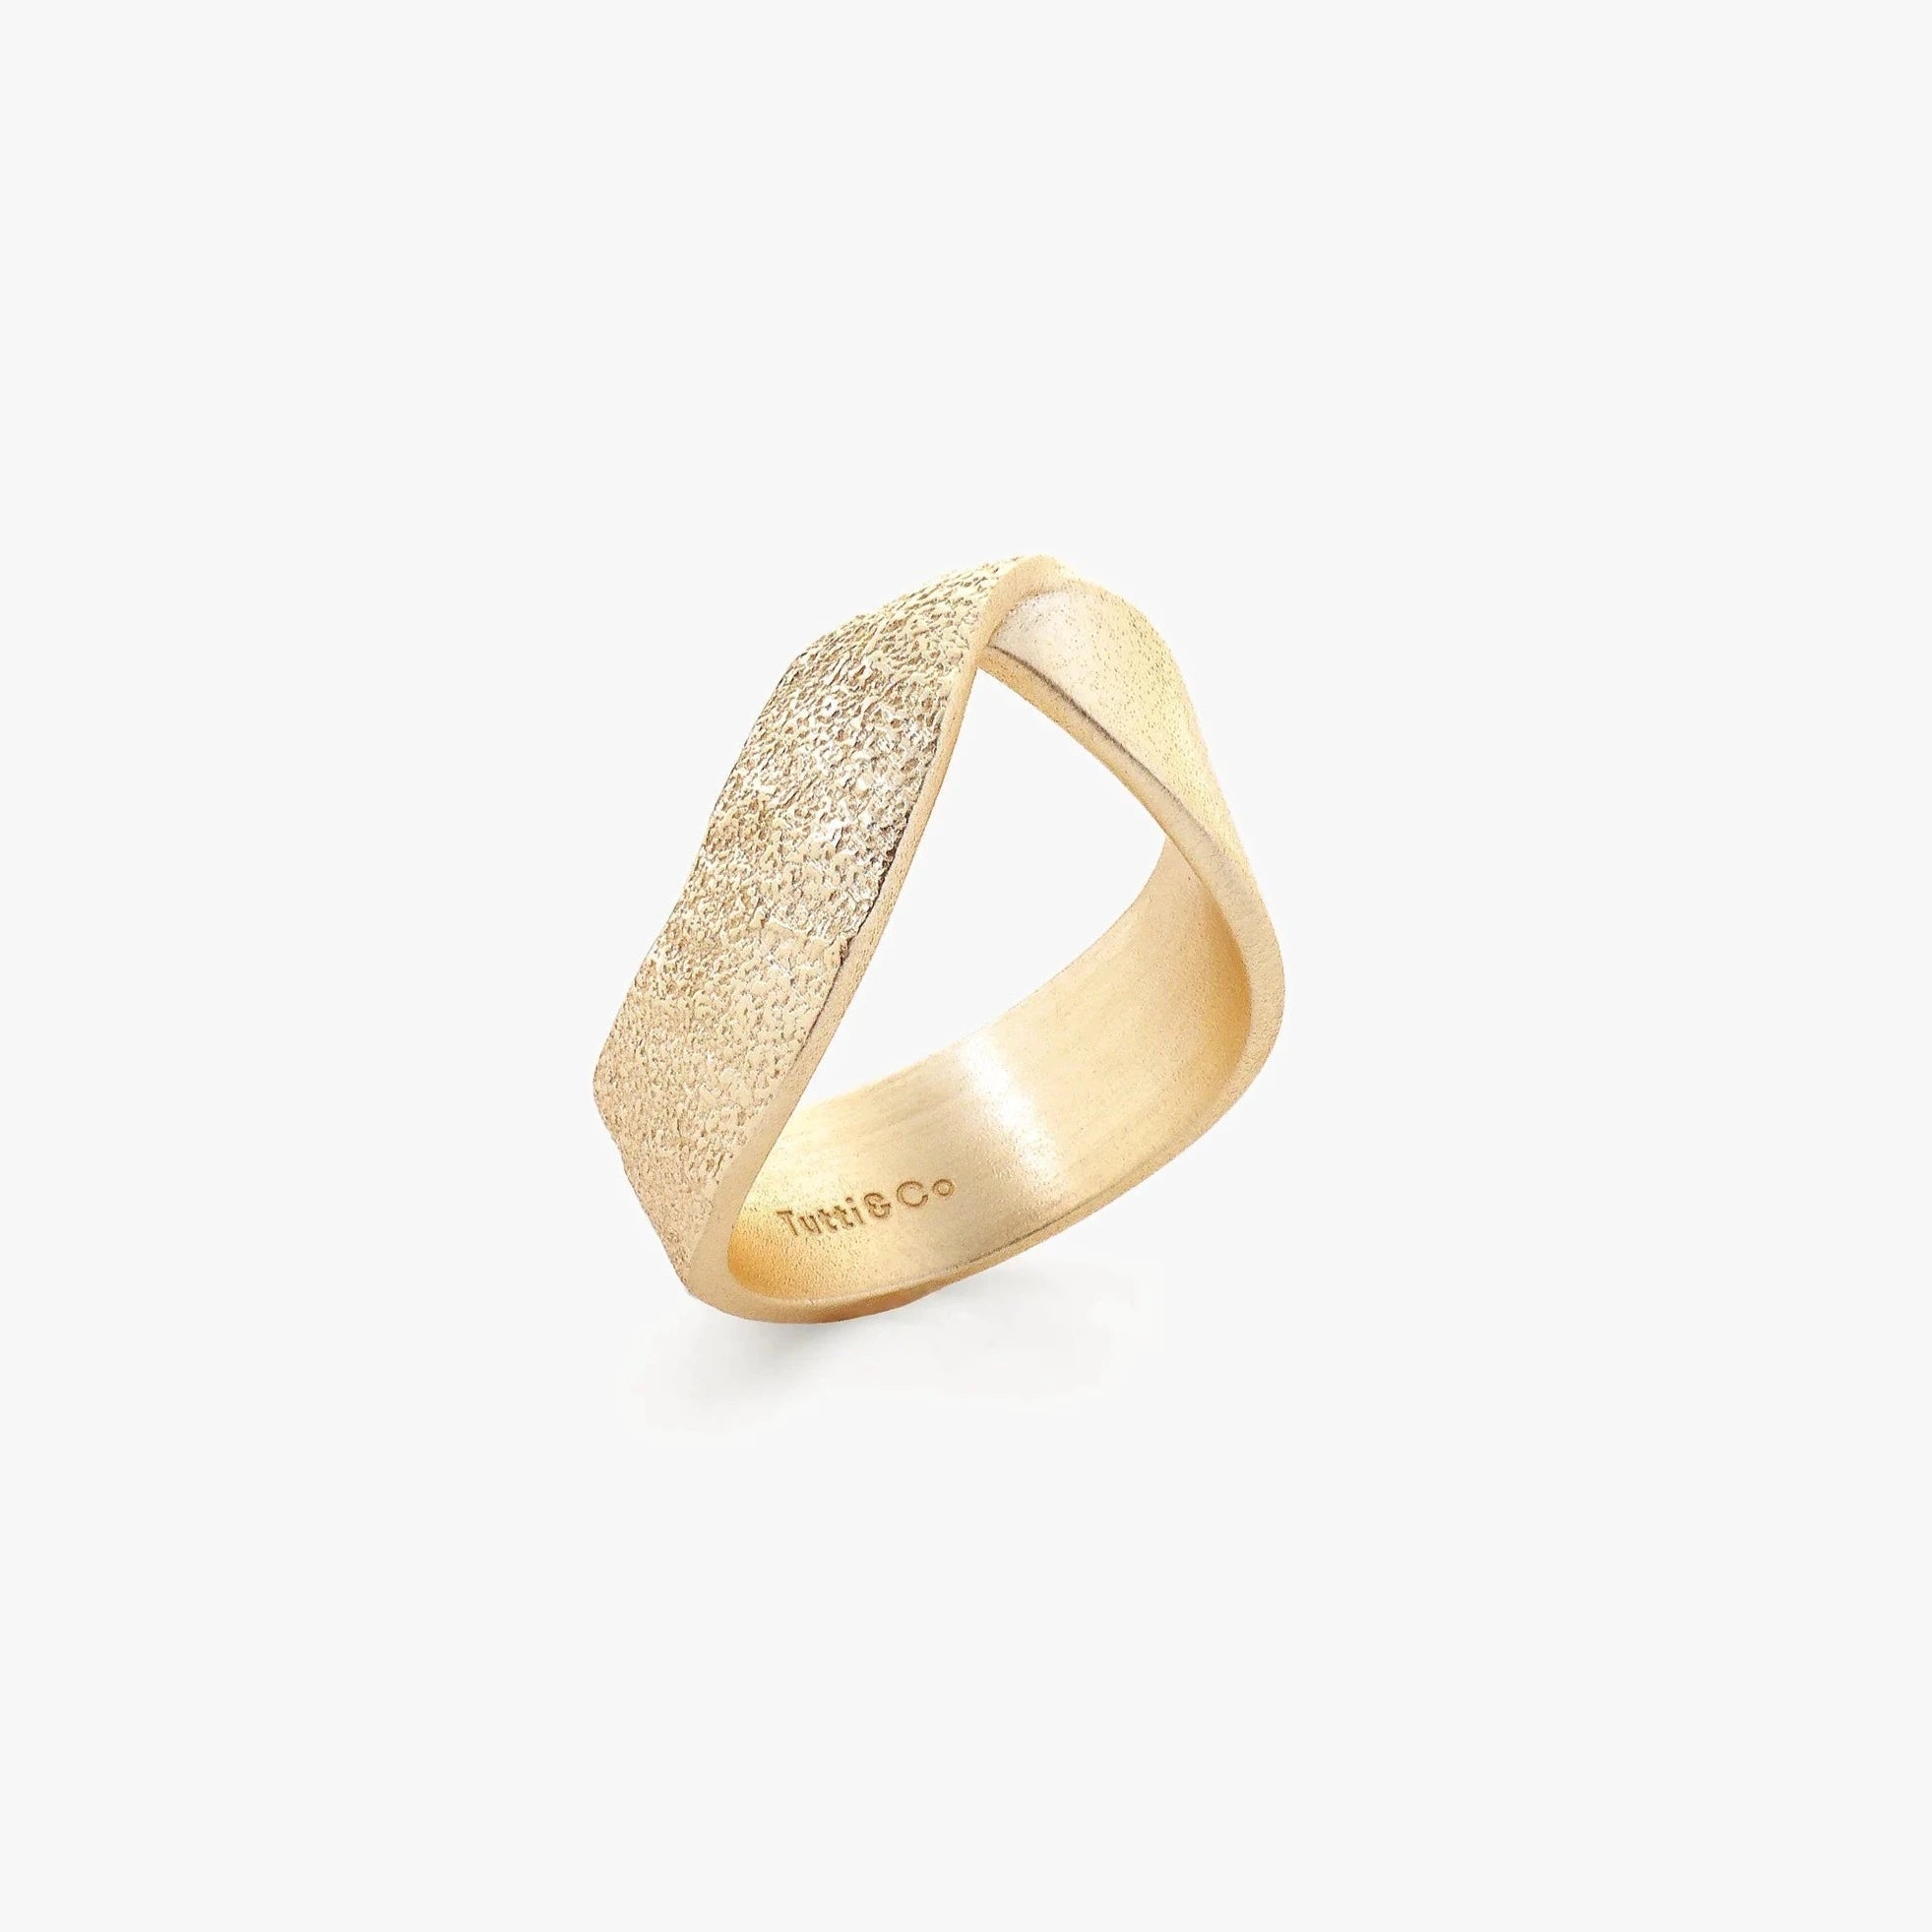 Praise Ring Gold - The Nancy Smillie Shop - Art, Jewellery & Designer Gifts Glasgow